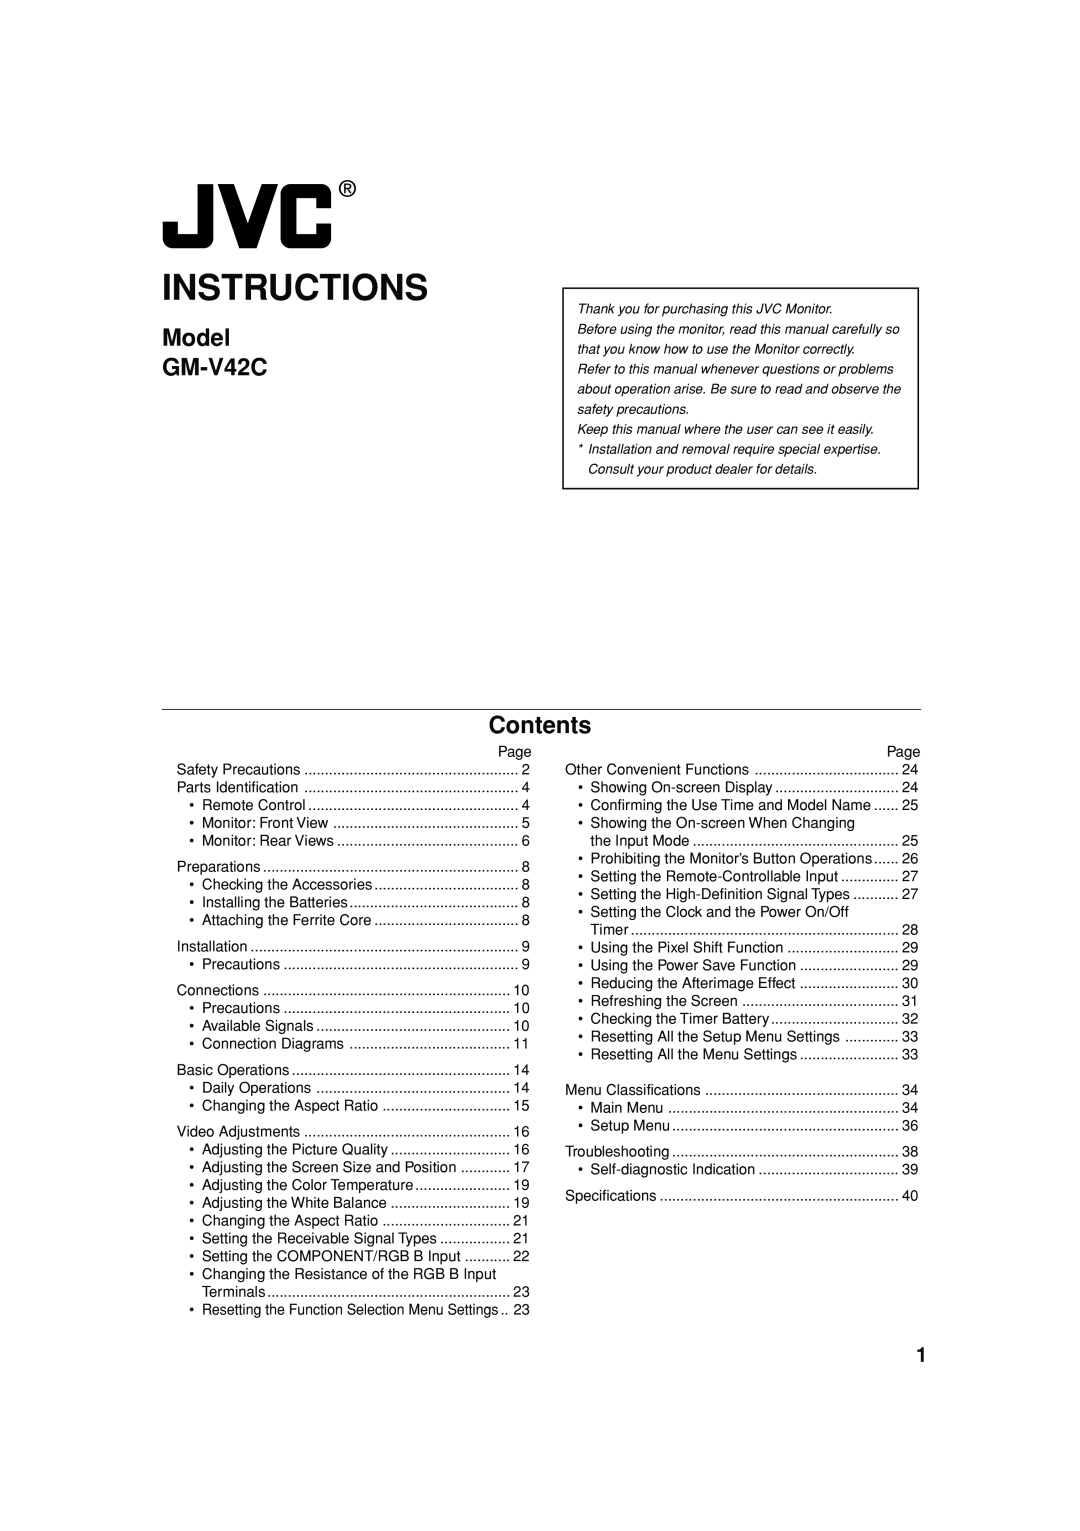 JVC 0204MKH-MW-VP, LCT1616-001A manual Instructions, Model GM-V42C, Contents 